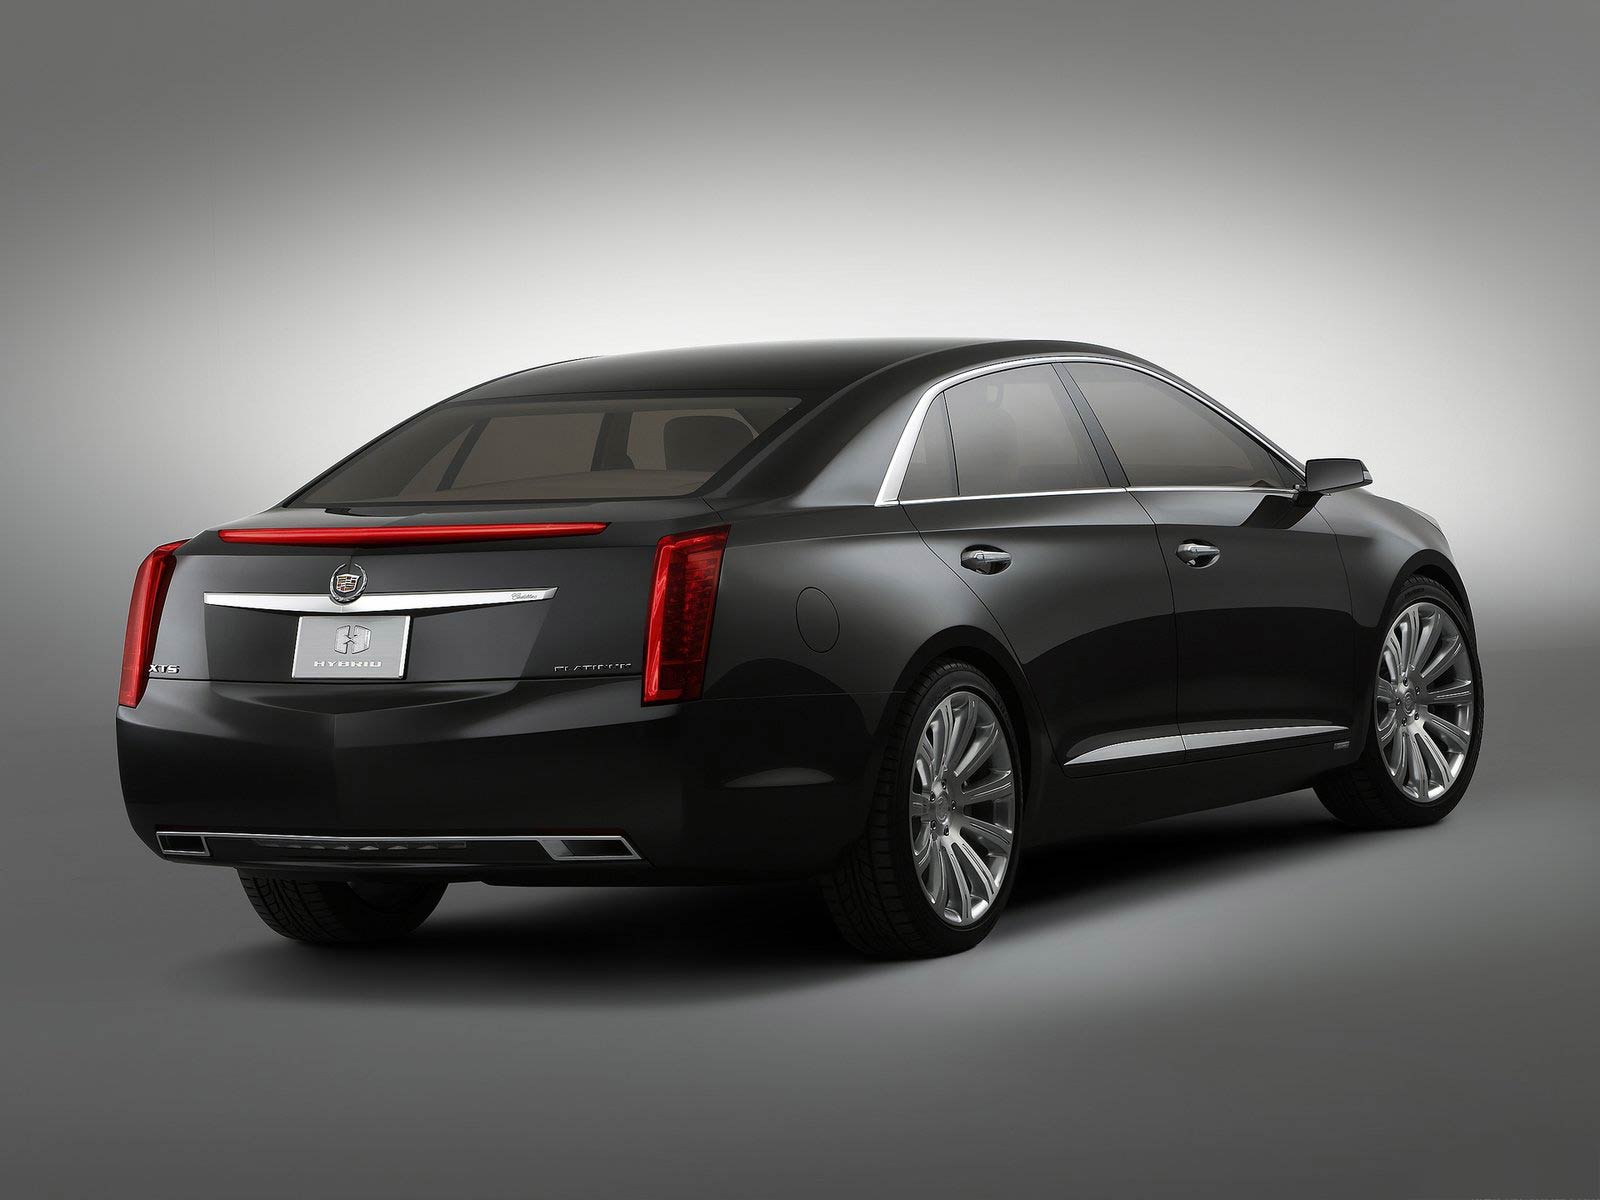 2010 Cadillac XTS Platinum Concept | Auto Cars Concept